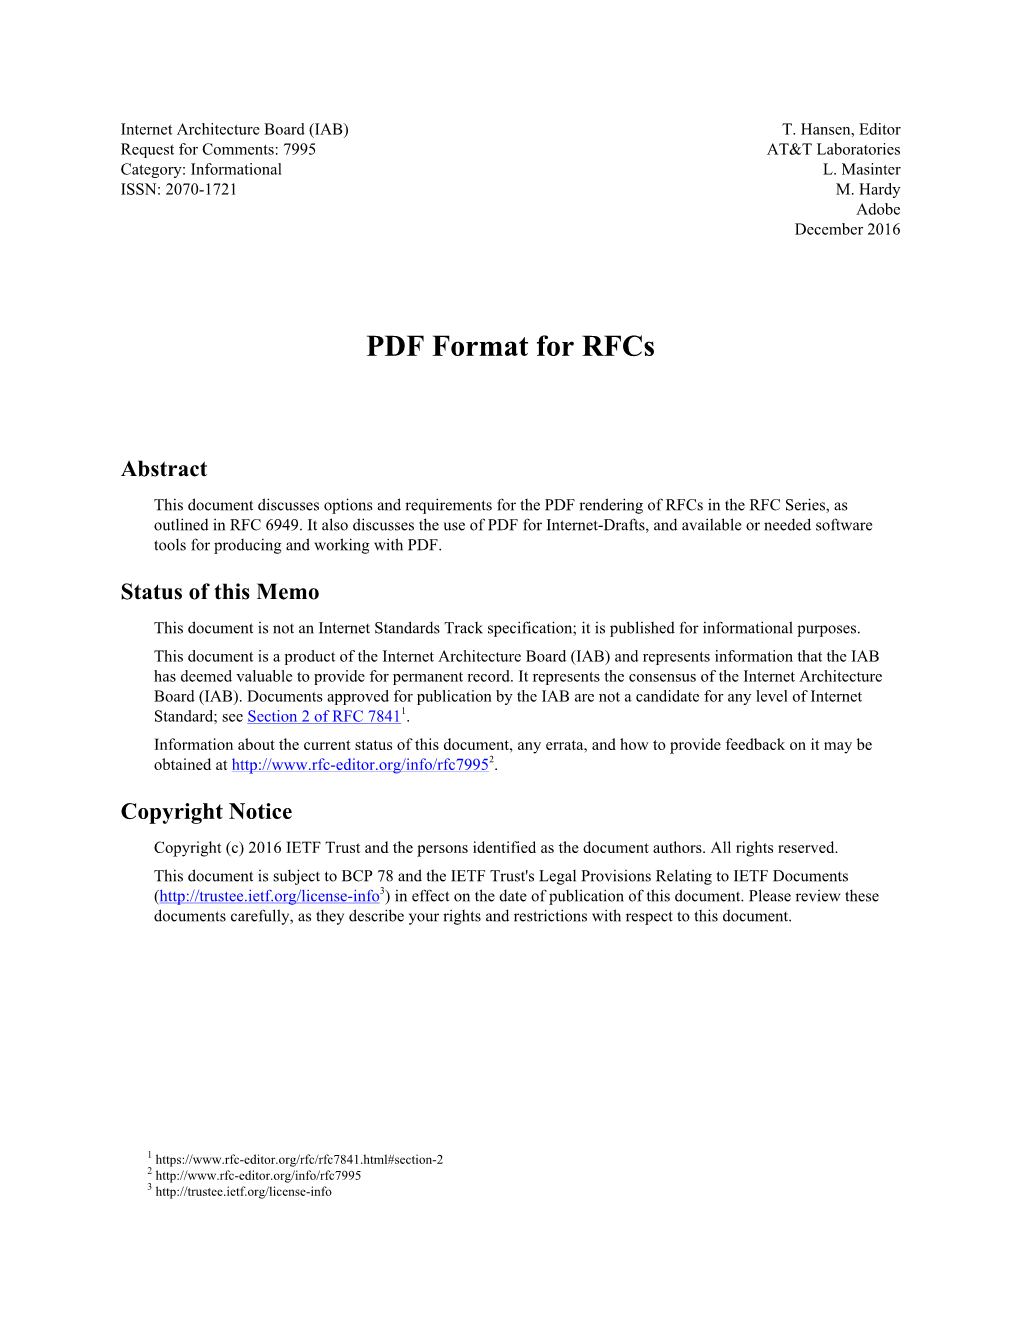 PDF Format for Rfcs